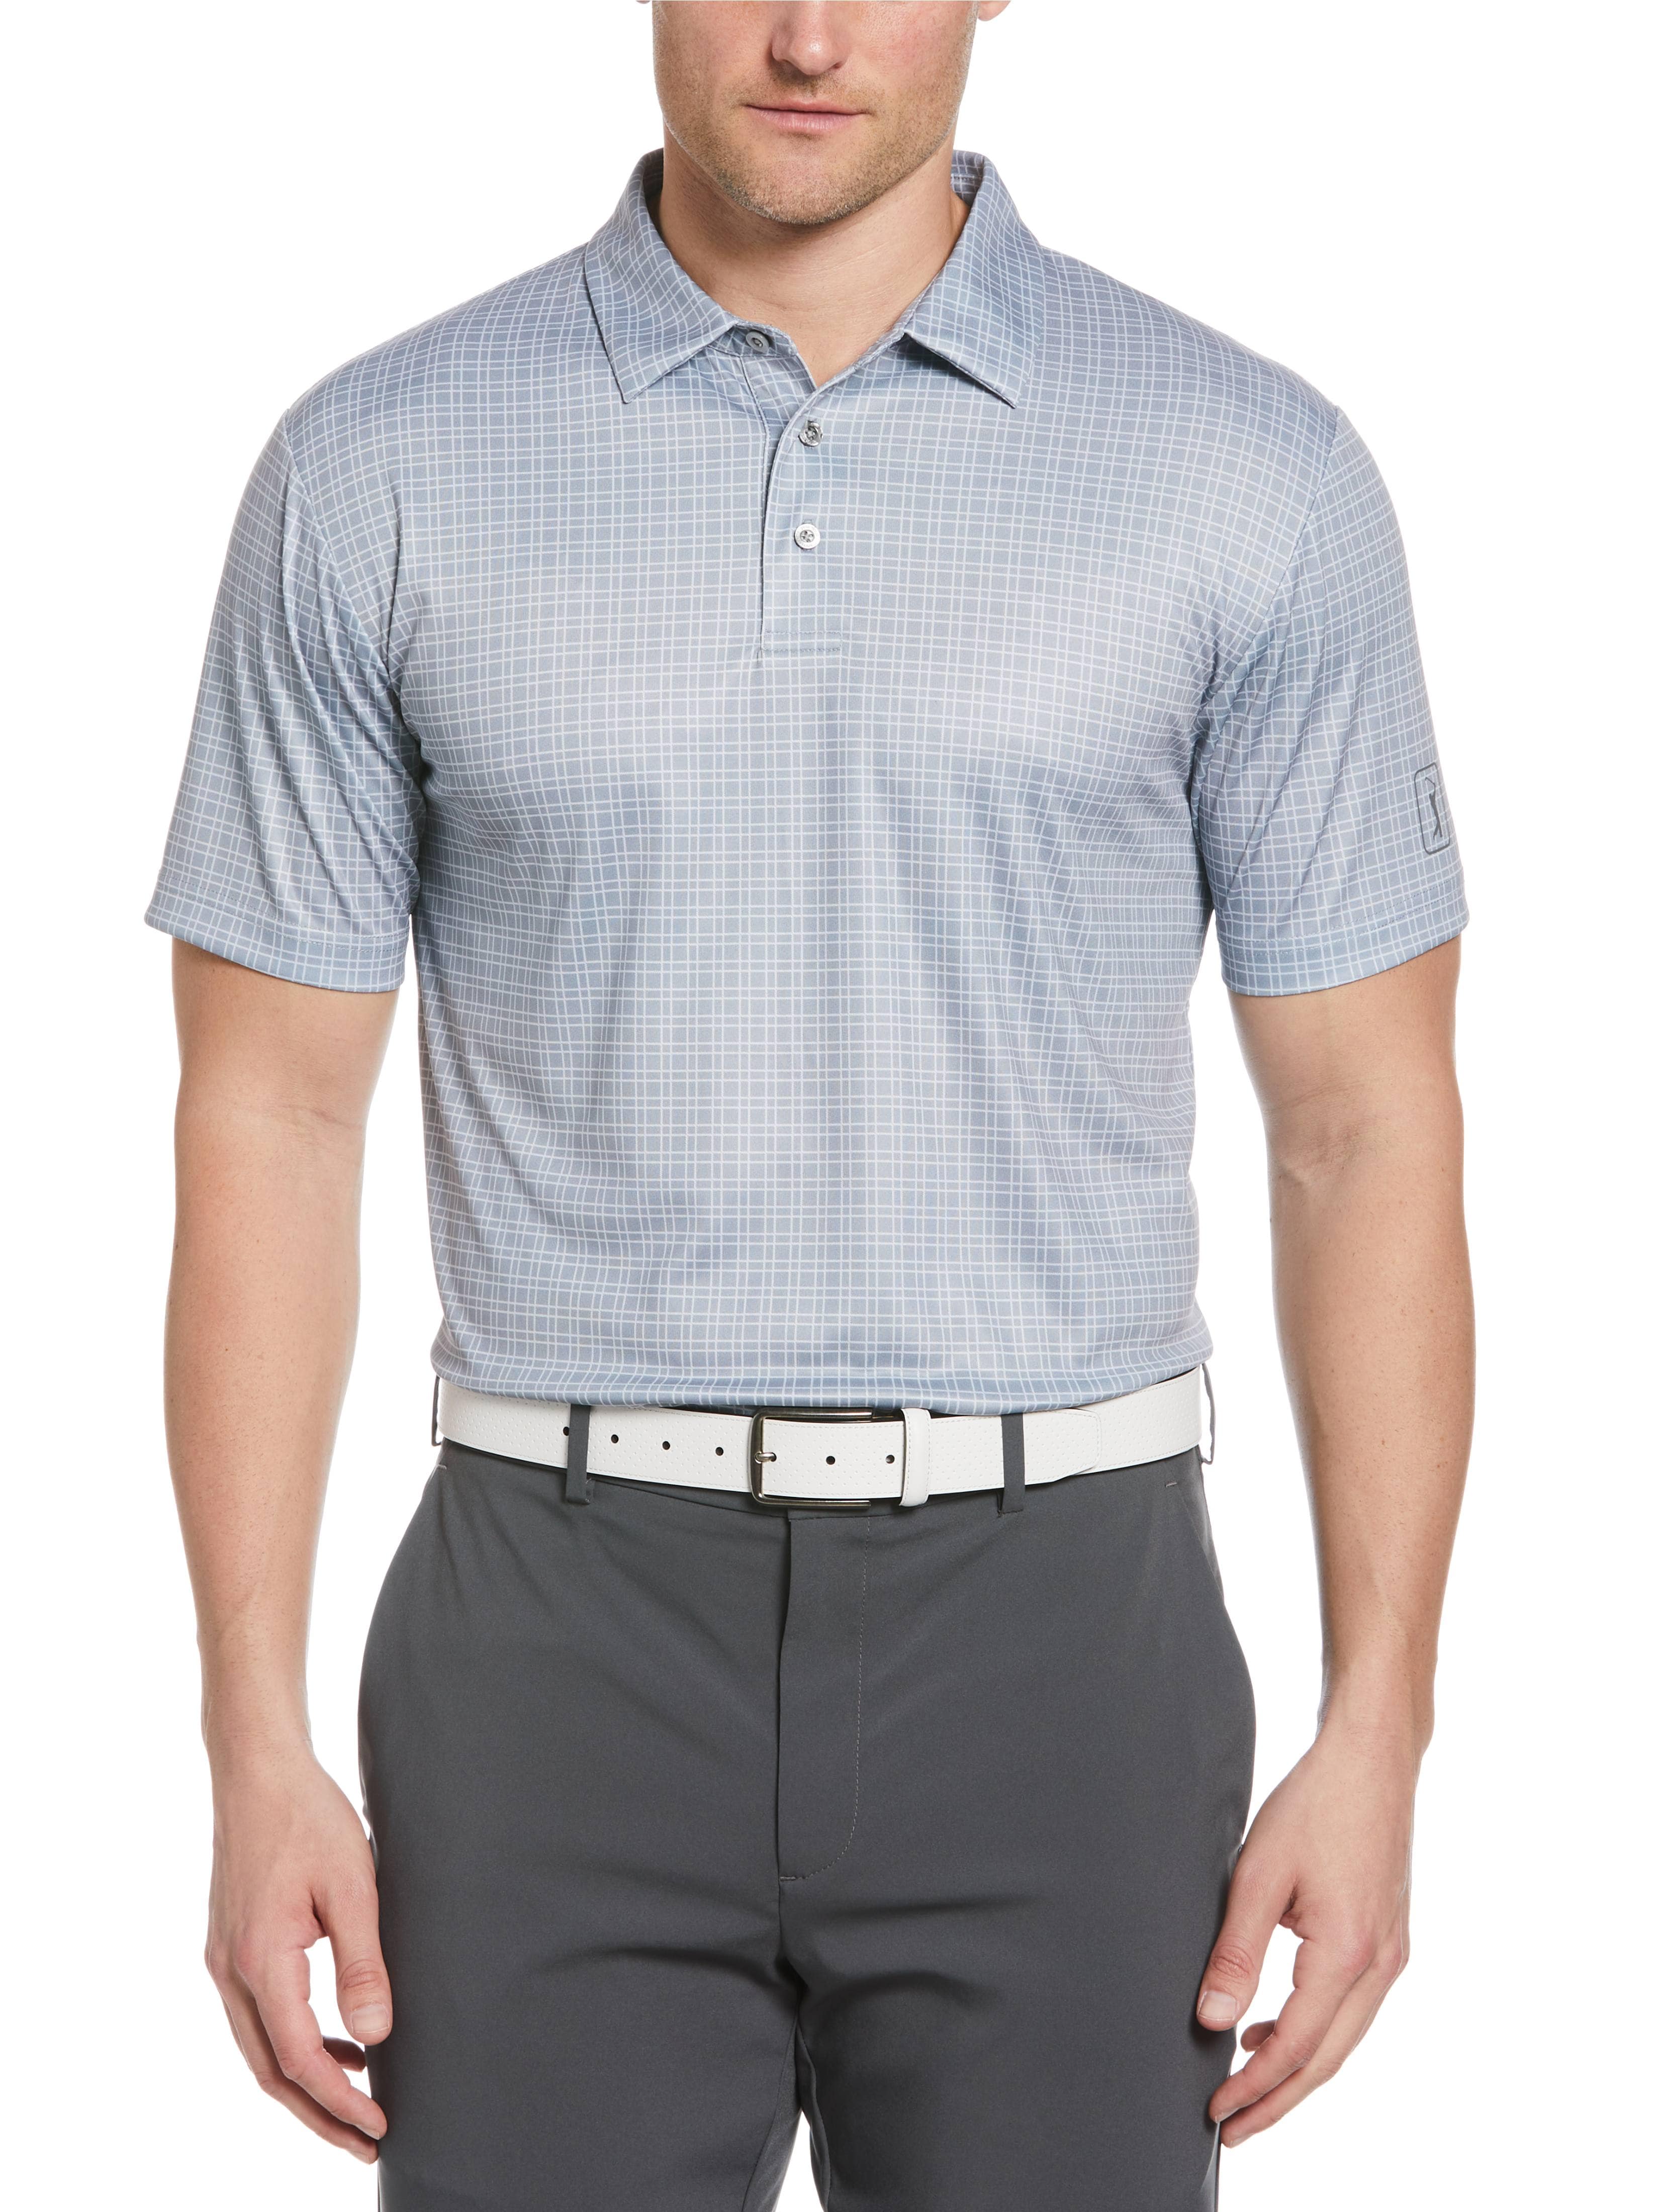 PGA TOUR Apparel Mens Menswear Print Golf Polo Shirt, Size Large, Tradewinds Gray, 100% Polyester | Golf Apparel Shop